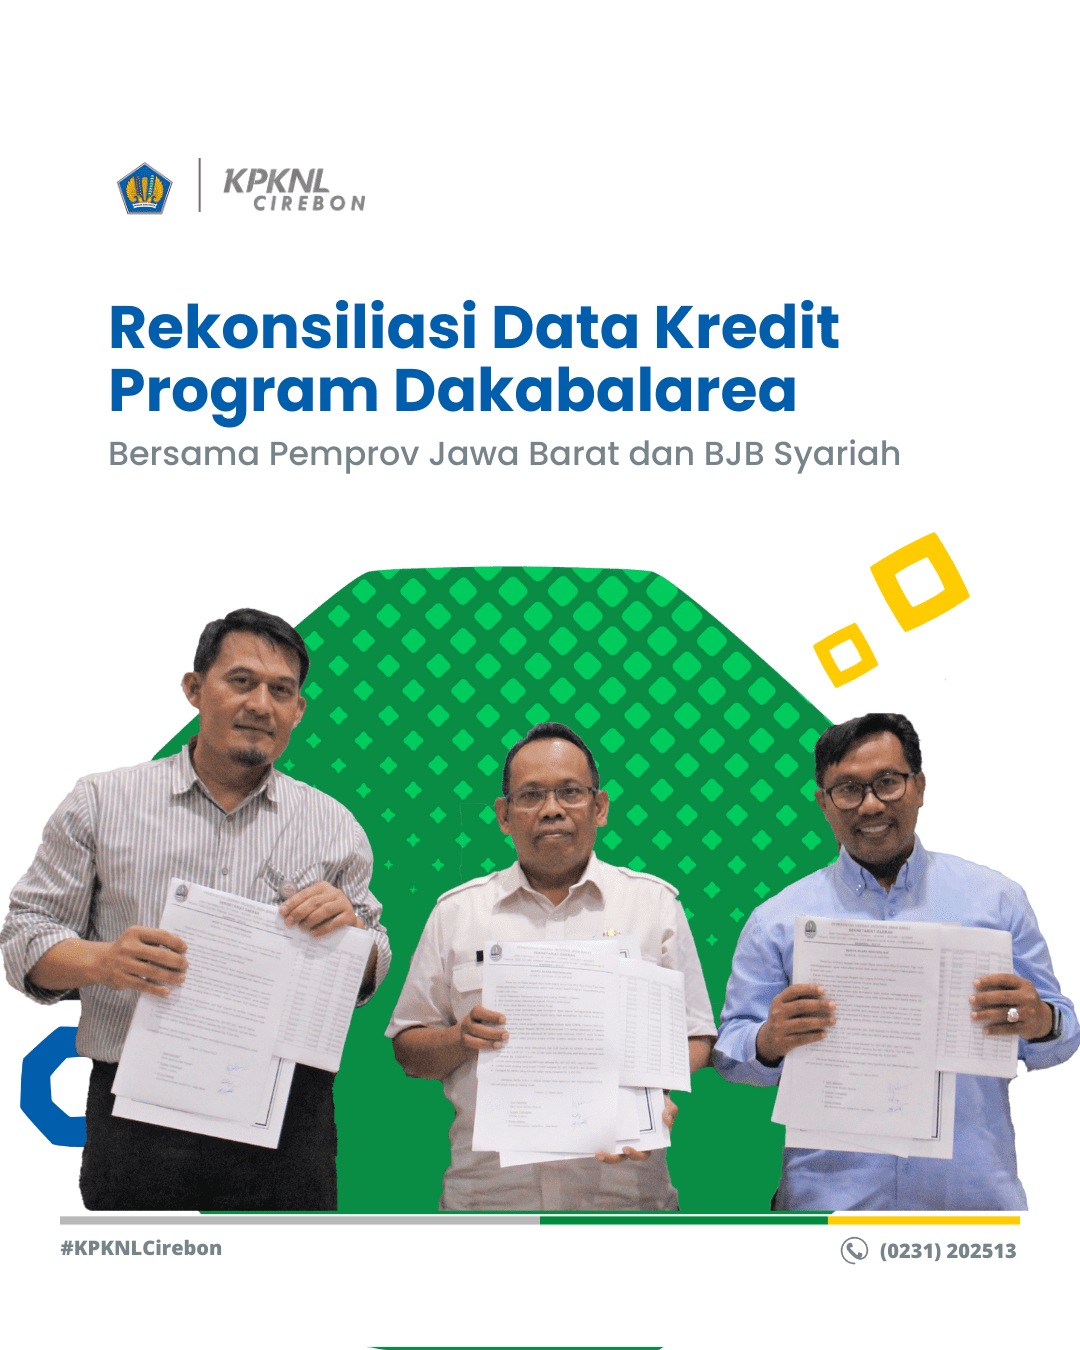 Rekonsiliasi Data Kredit Program Dakabalarea Bersama Pemerintah Provinsi Jawa Barat dan BJB Syariah